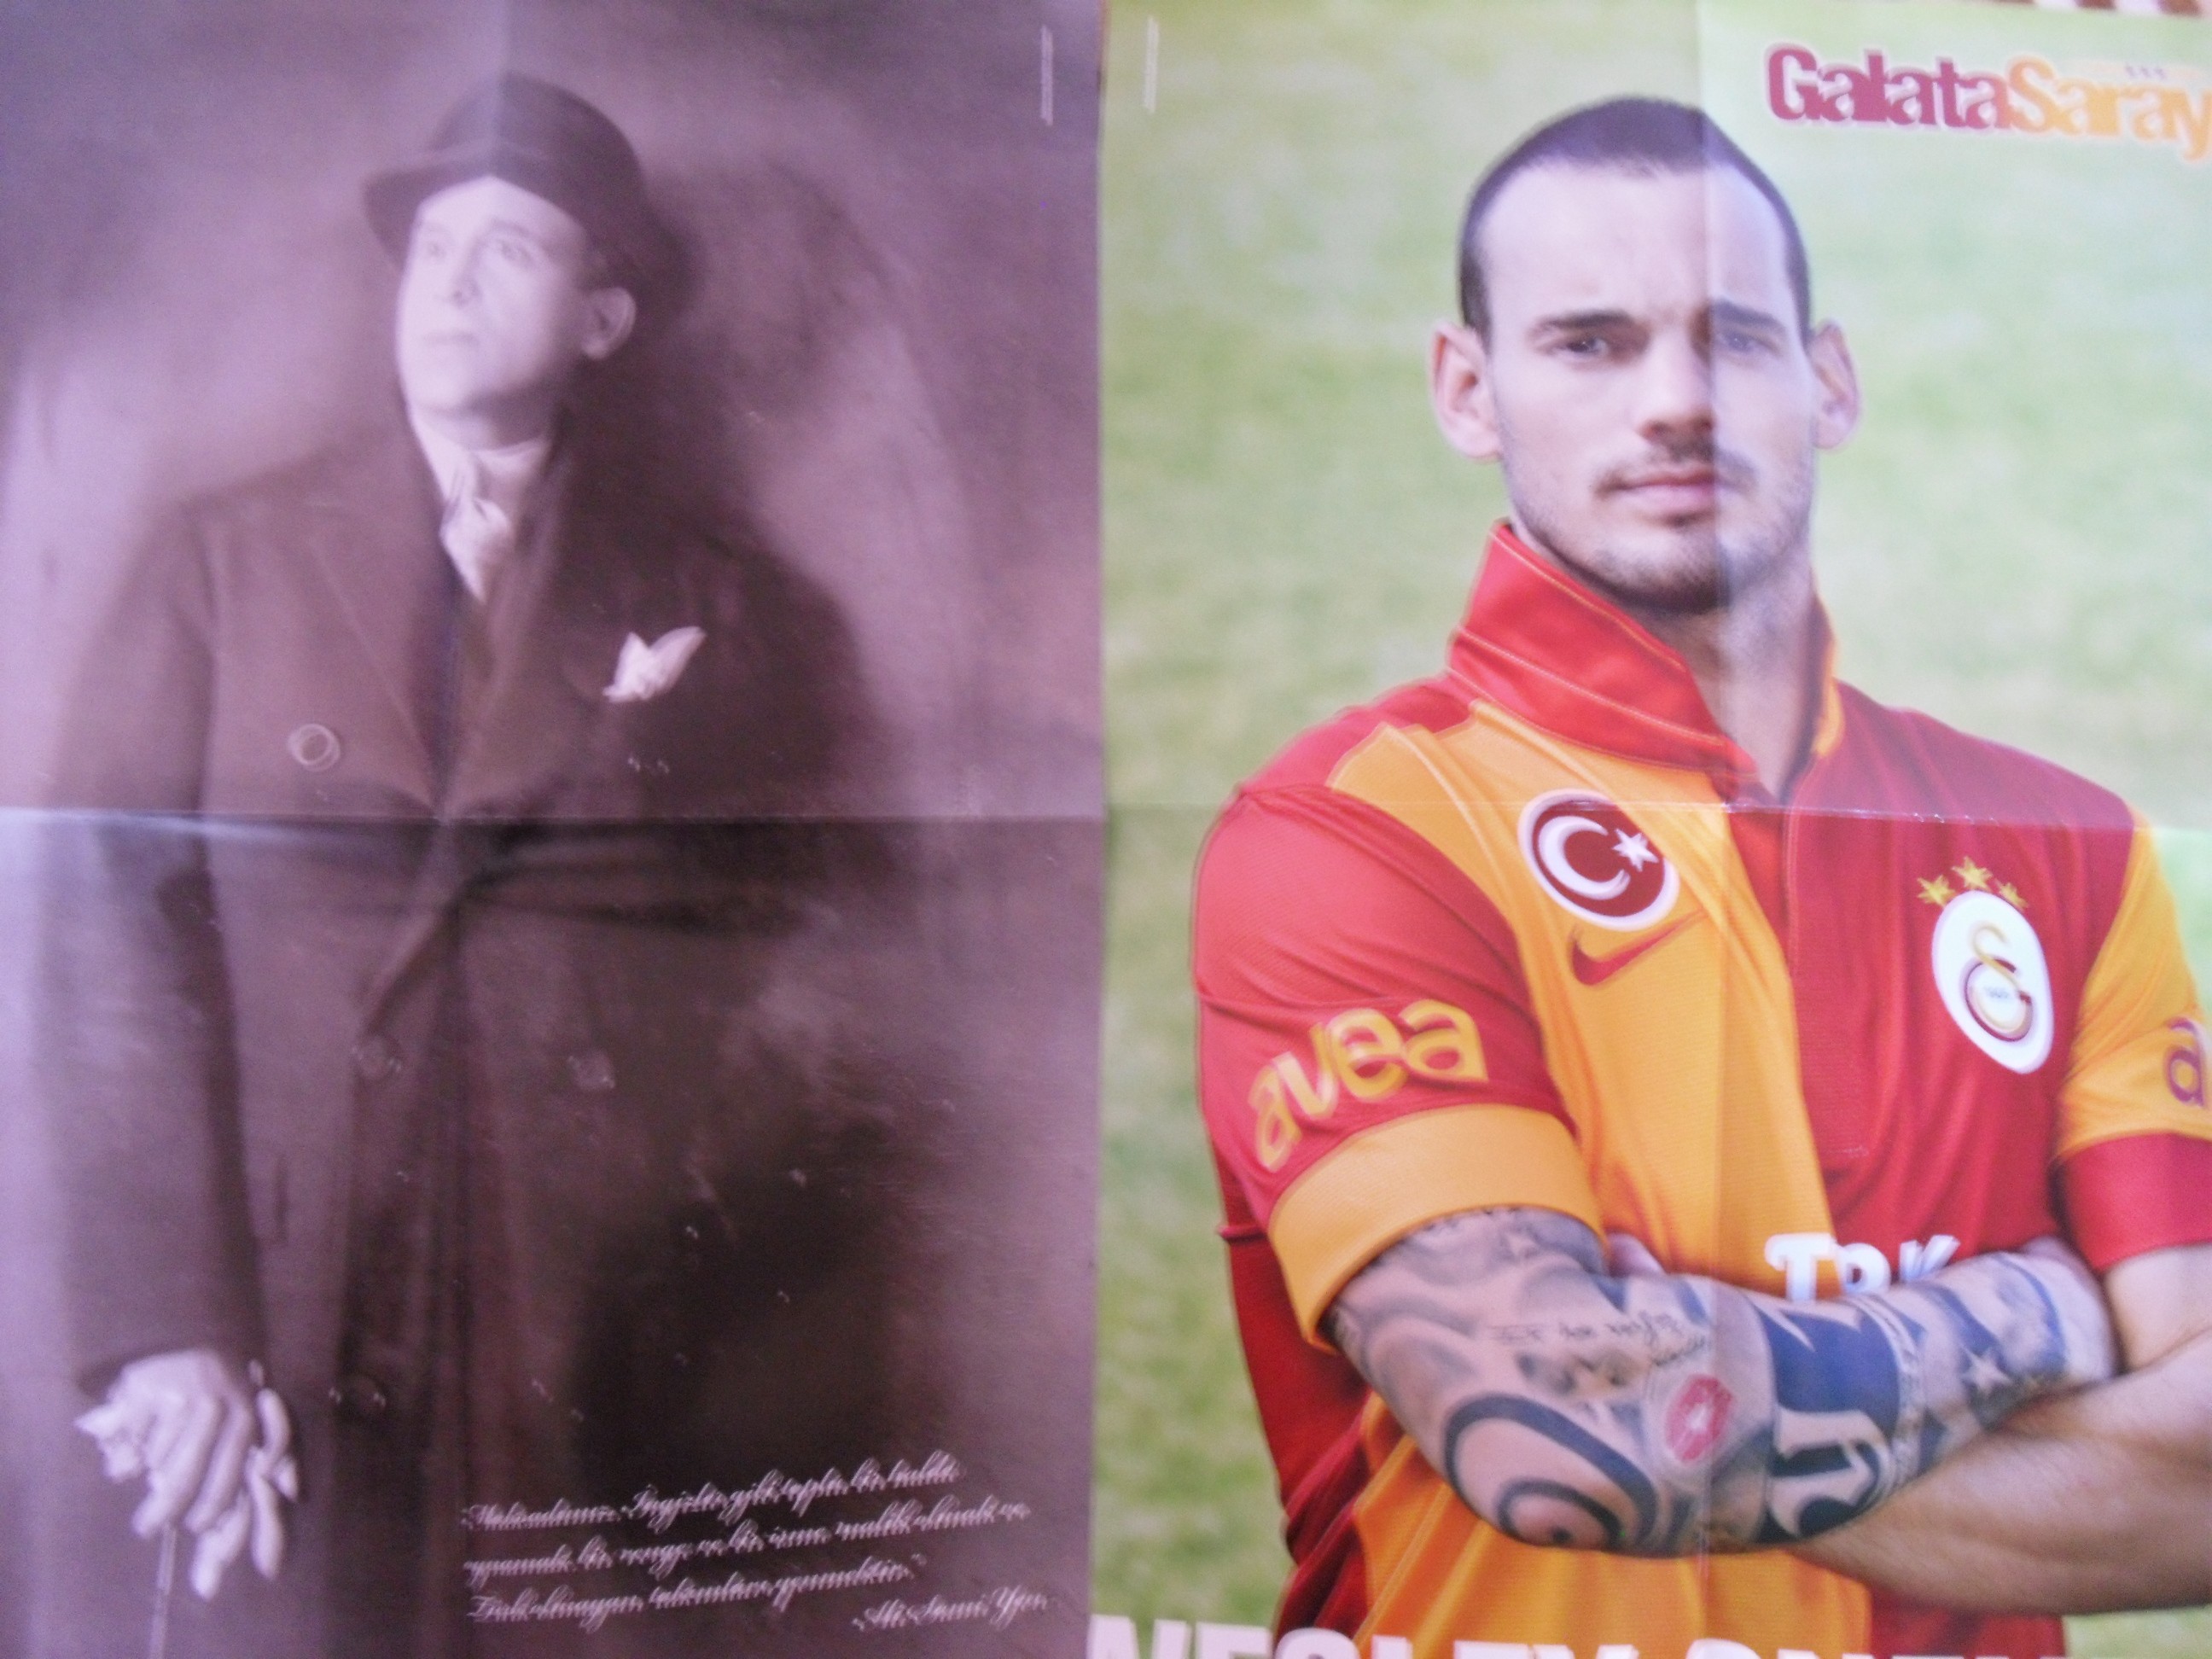  Galatasaray Dergi